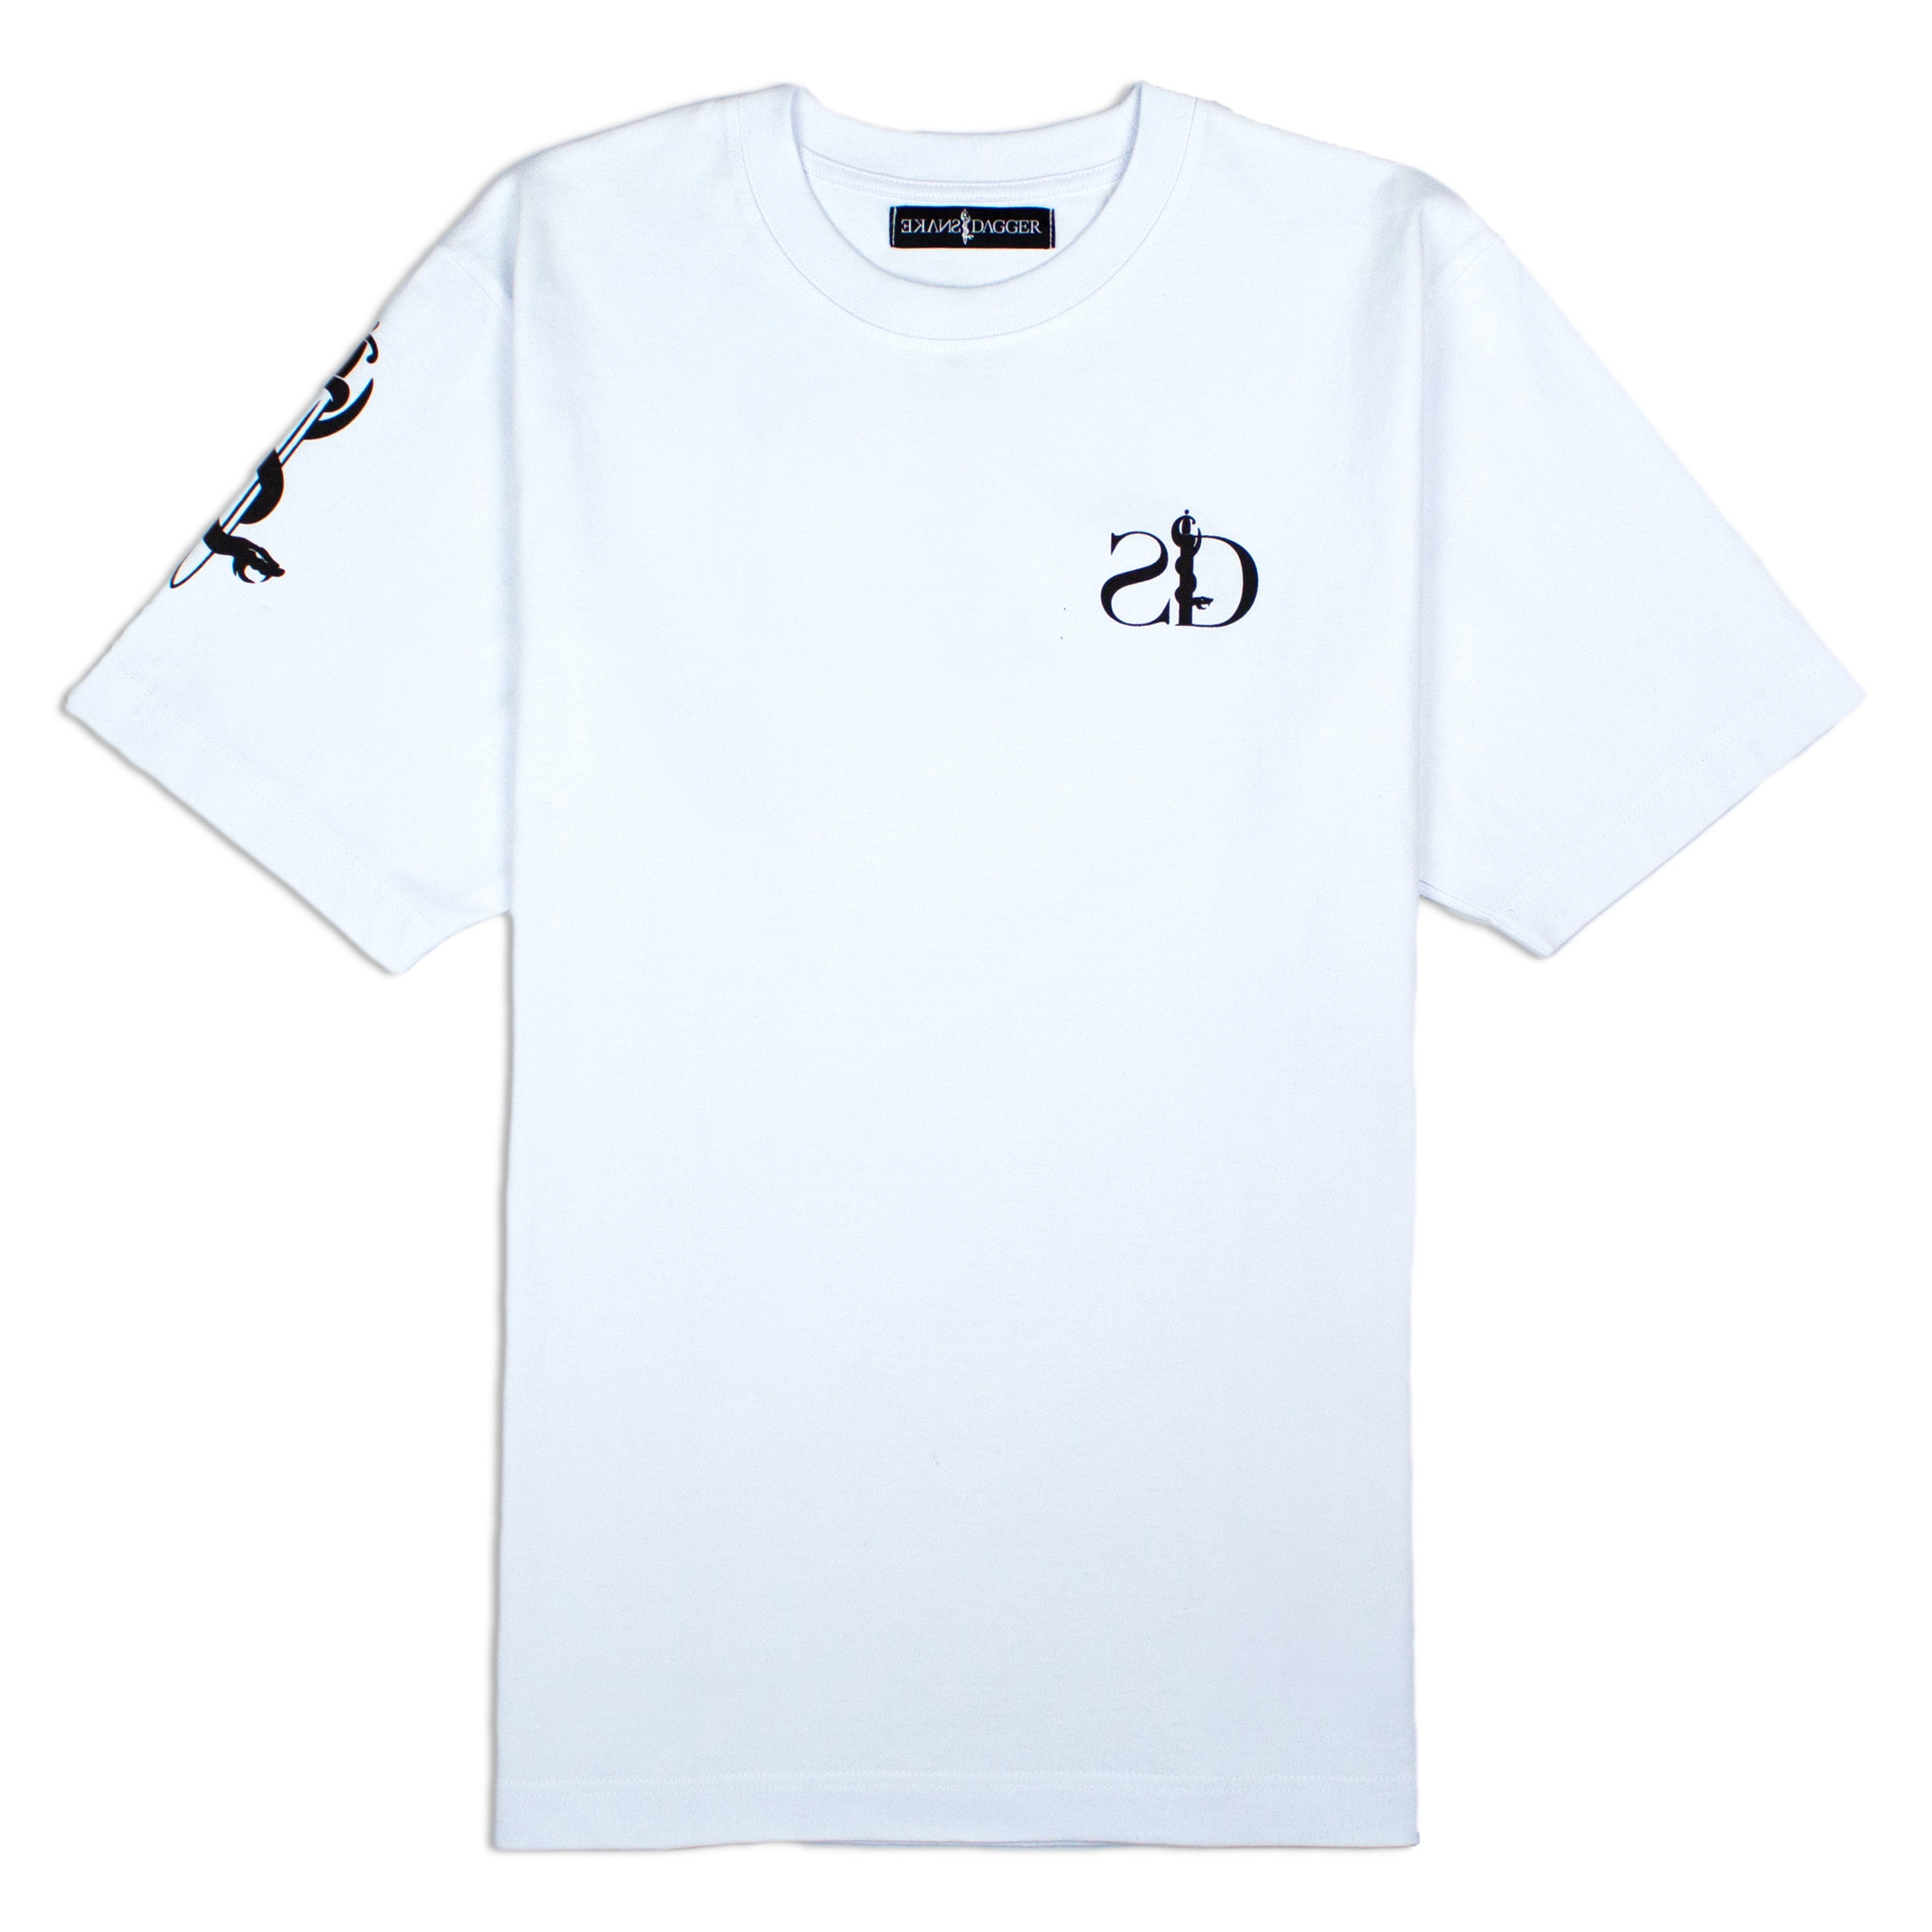 Short sleeve Multi Logo t-shirt / White with black print detail